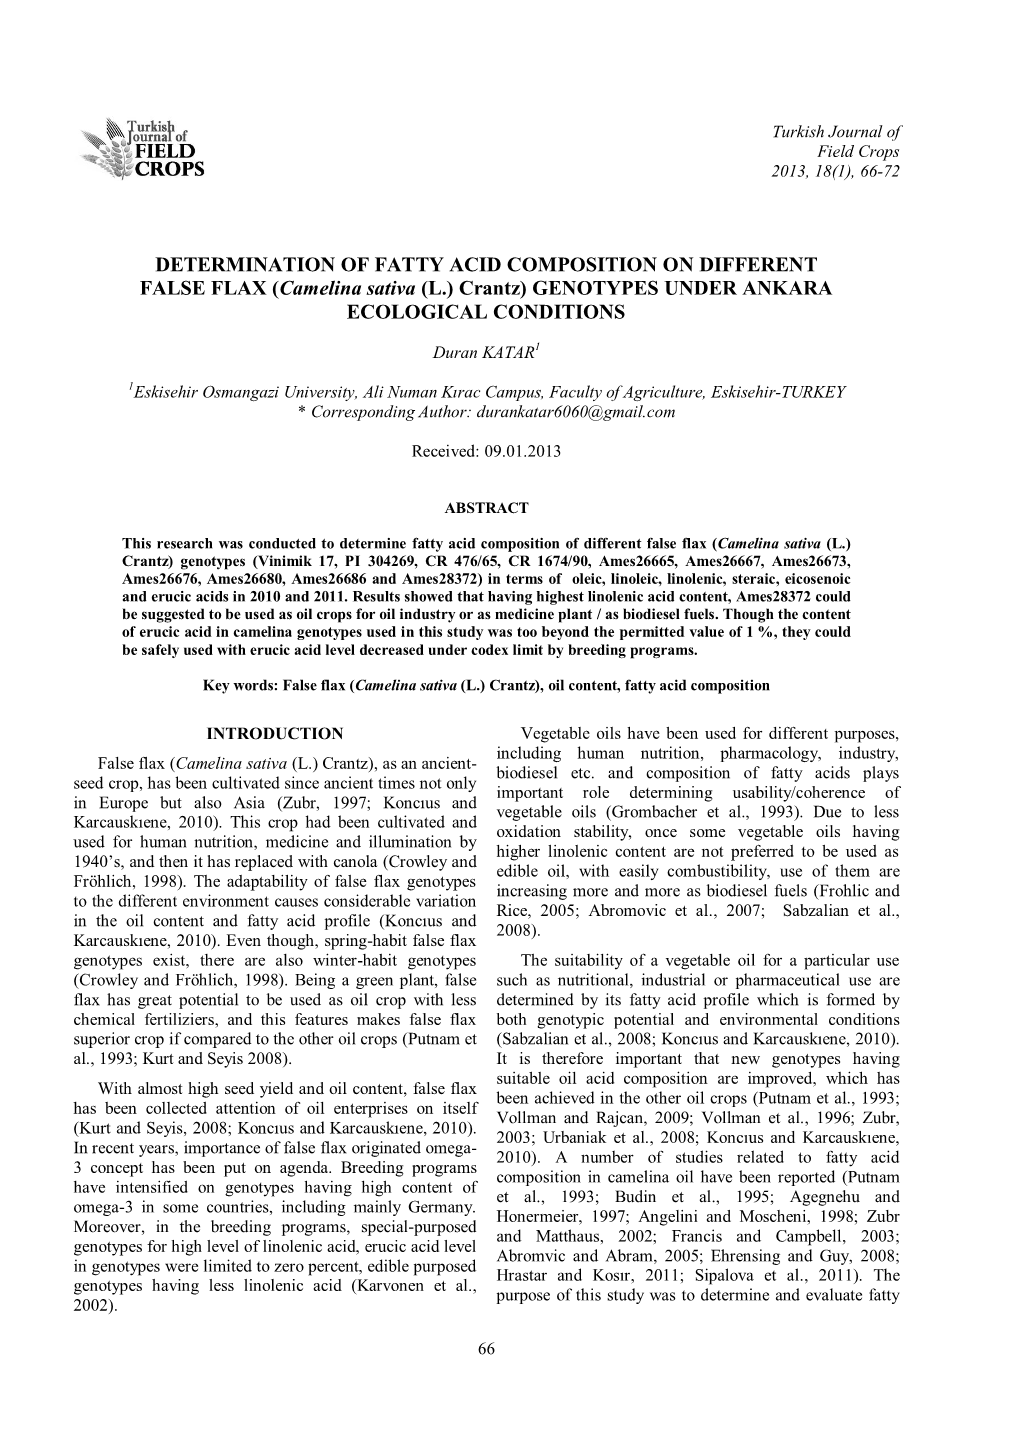 DETERMINATION of FATTY ACID COMPOSITION on DIFFERENT FALSE FLAX (Camelina Sativa (L.) Crantz) GENOTYPES UNDER ANKARA ECOLOGICAL CONDITIONS